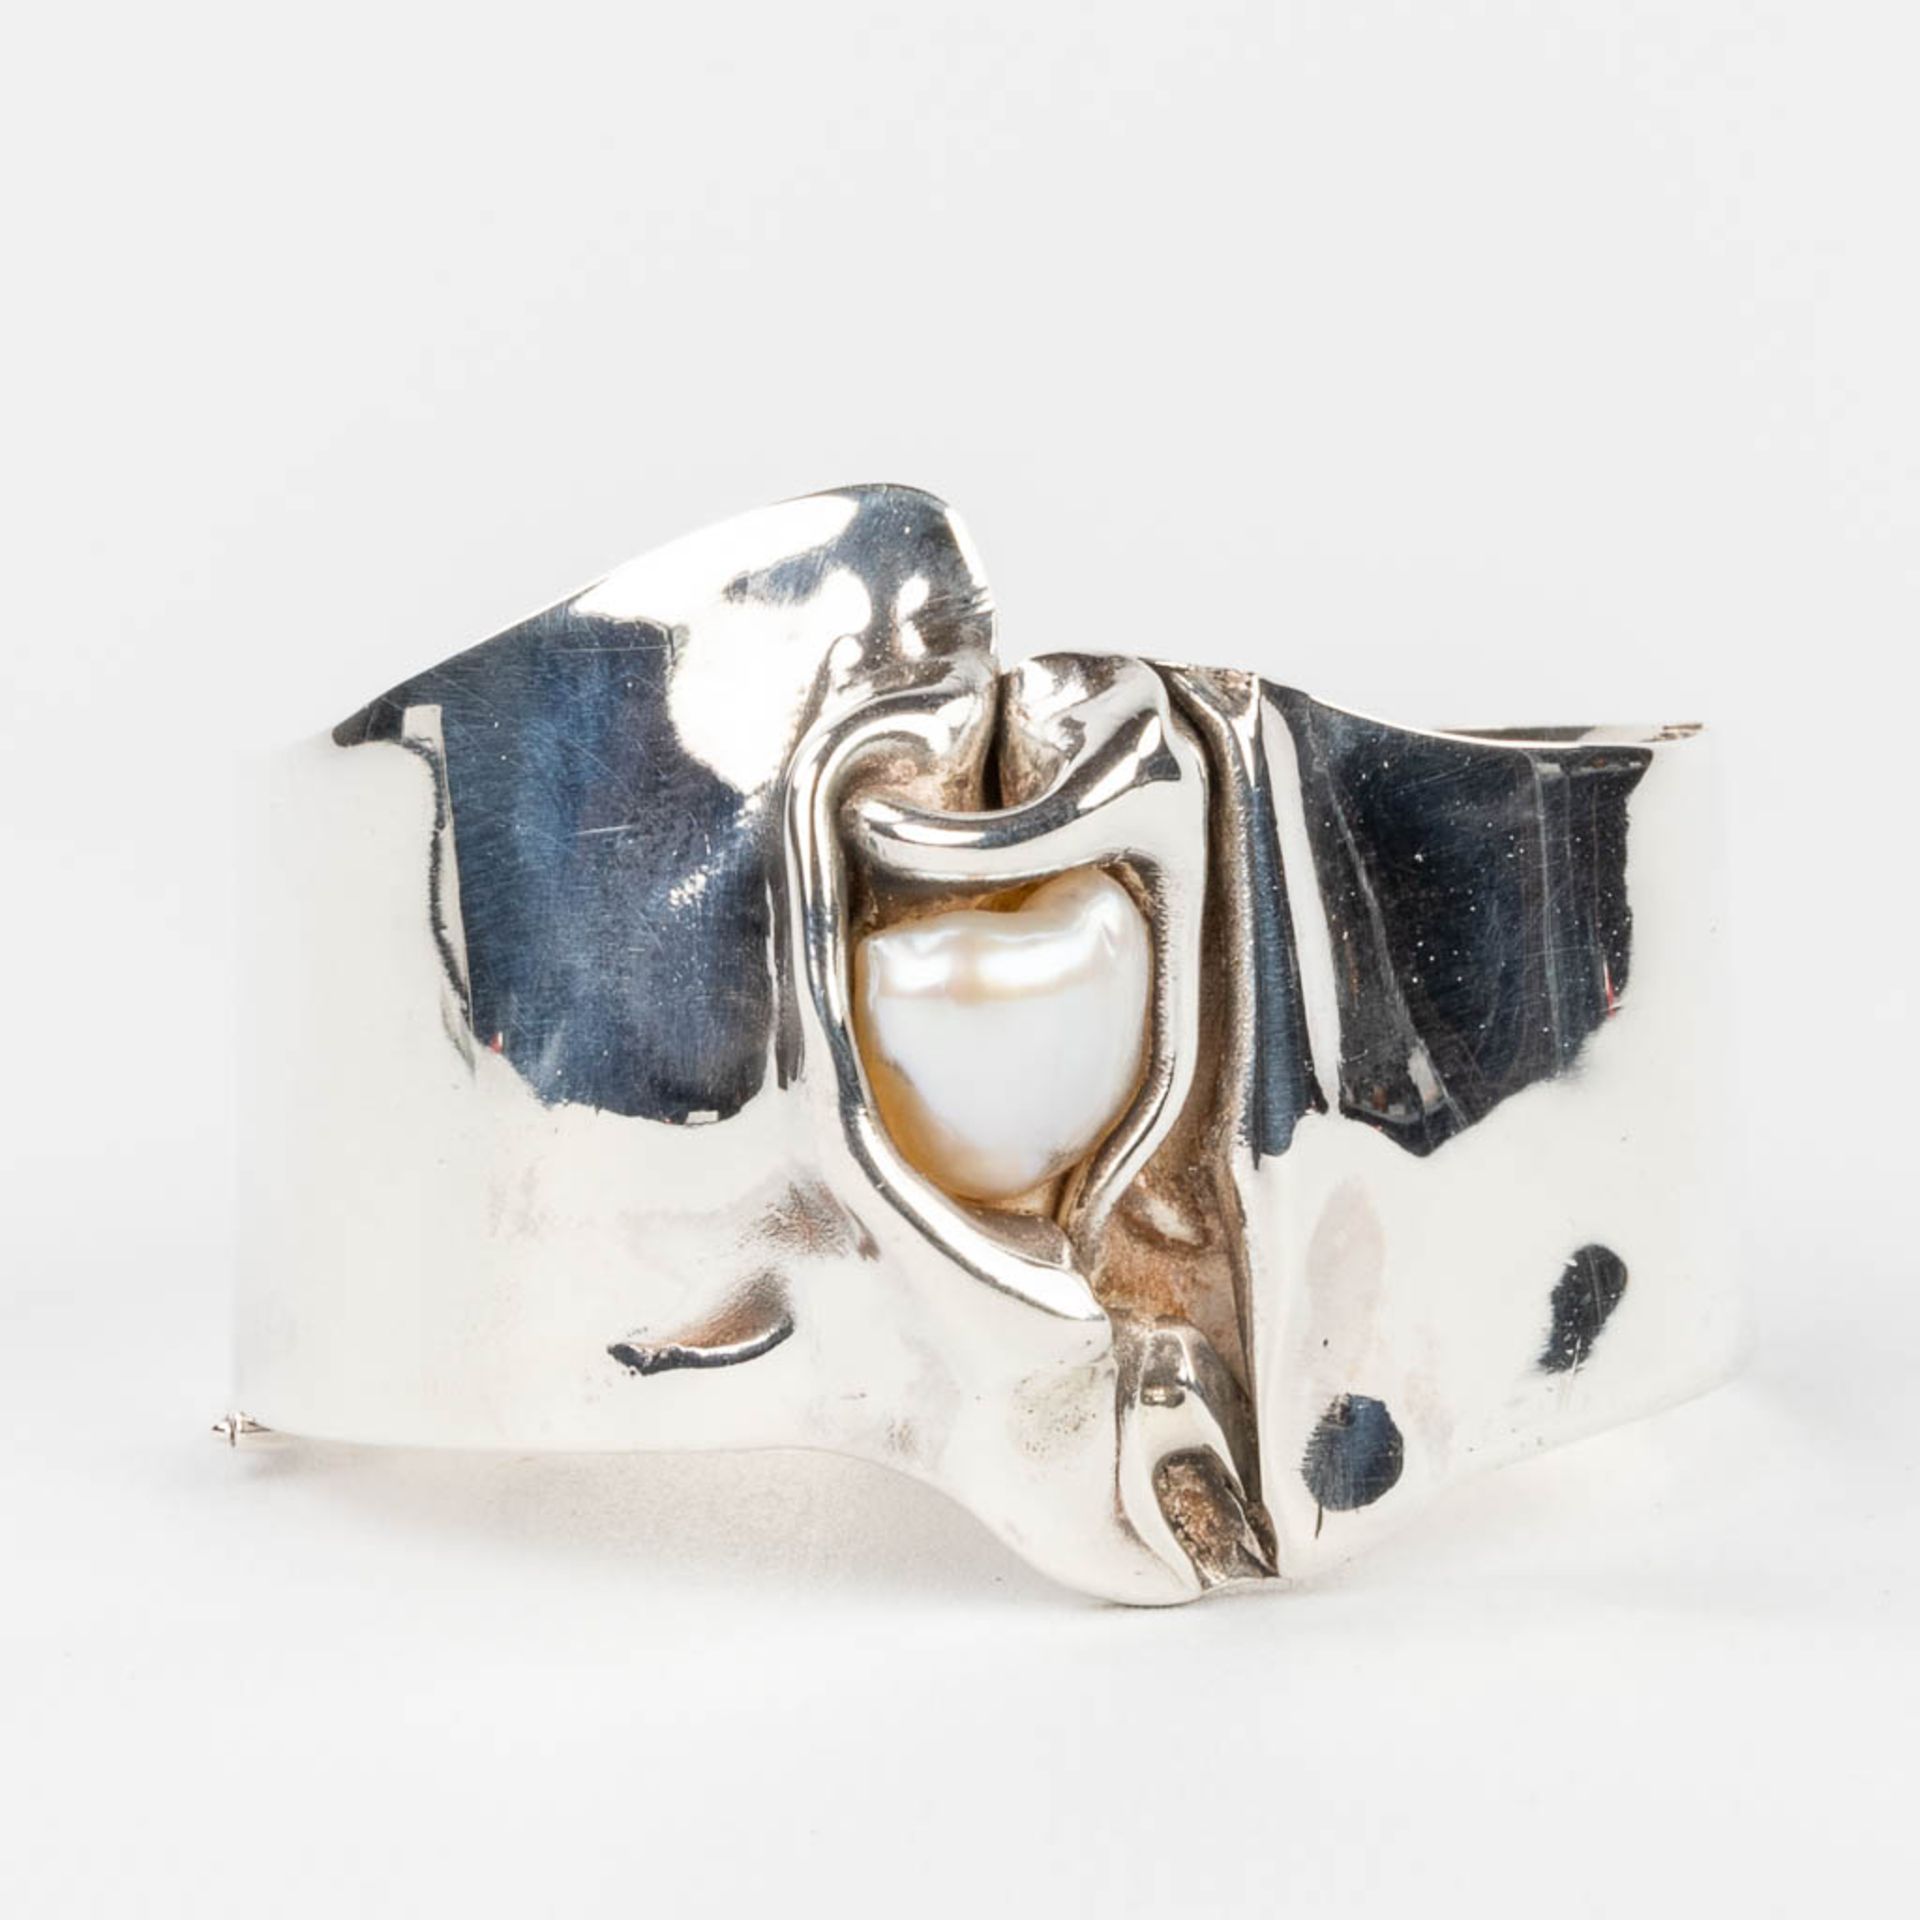 Jean-Pierre DE SAEDELEER (1946) 'Bracelet with pearl', made of silver